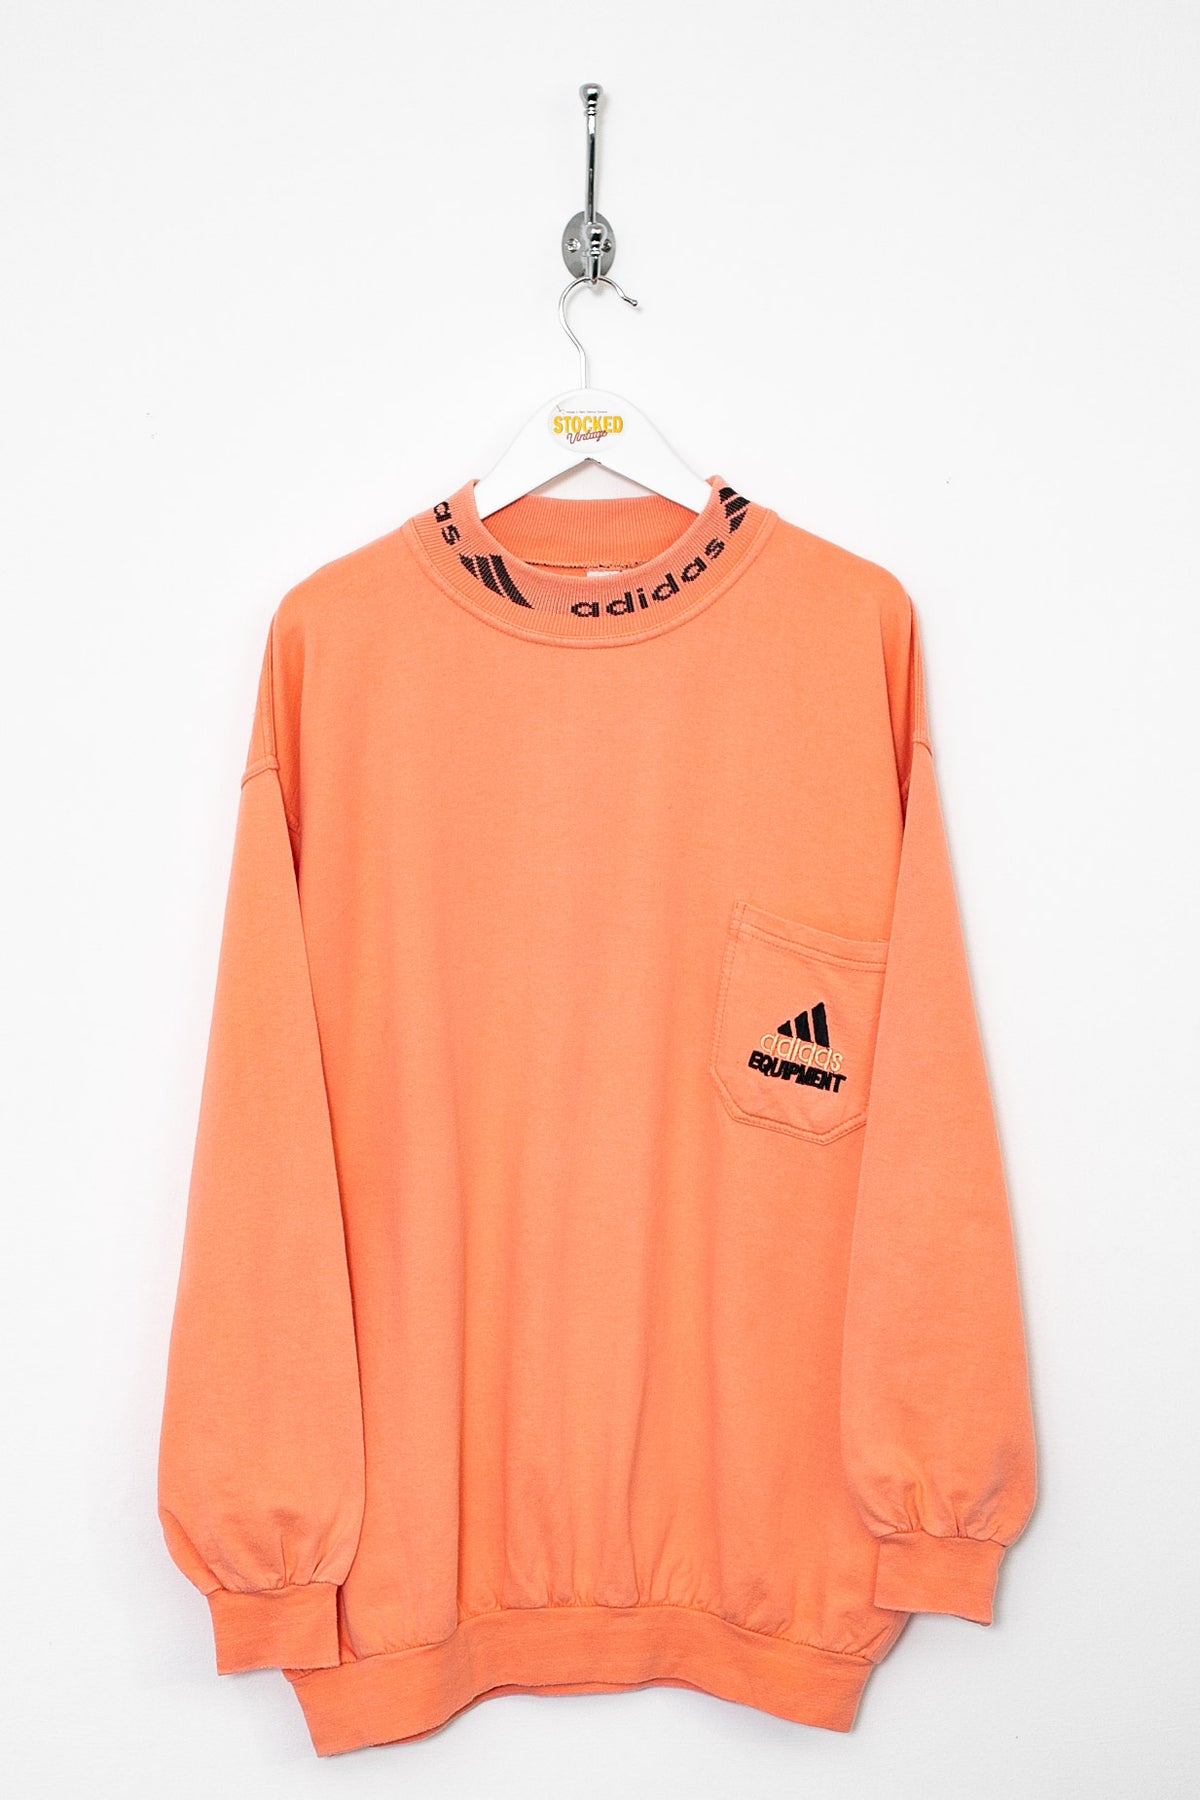 Bootleg Adidas Sweatshirt (M)